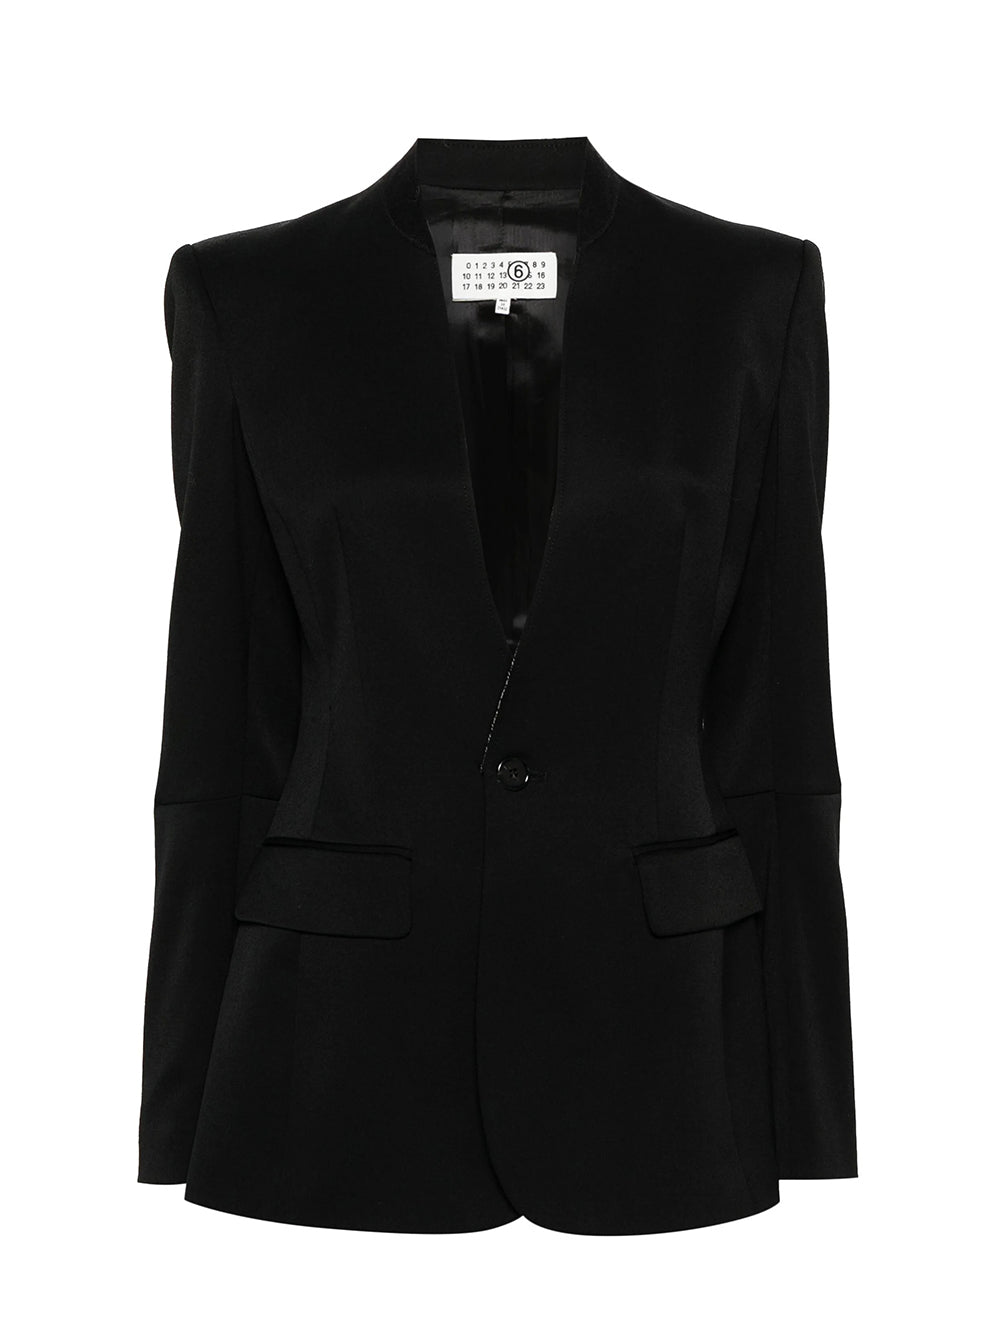 Collarless Suit Jacket (Black)